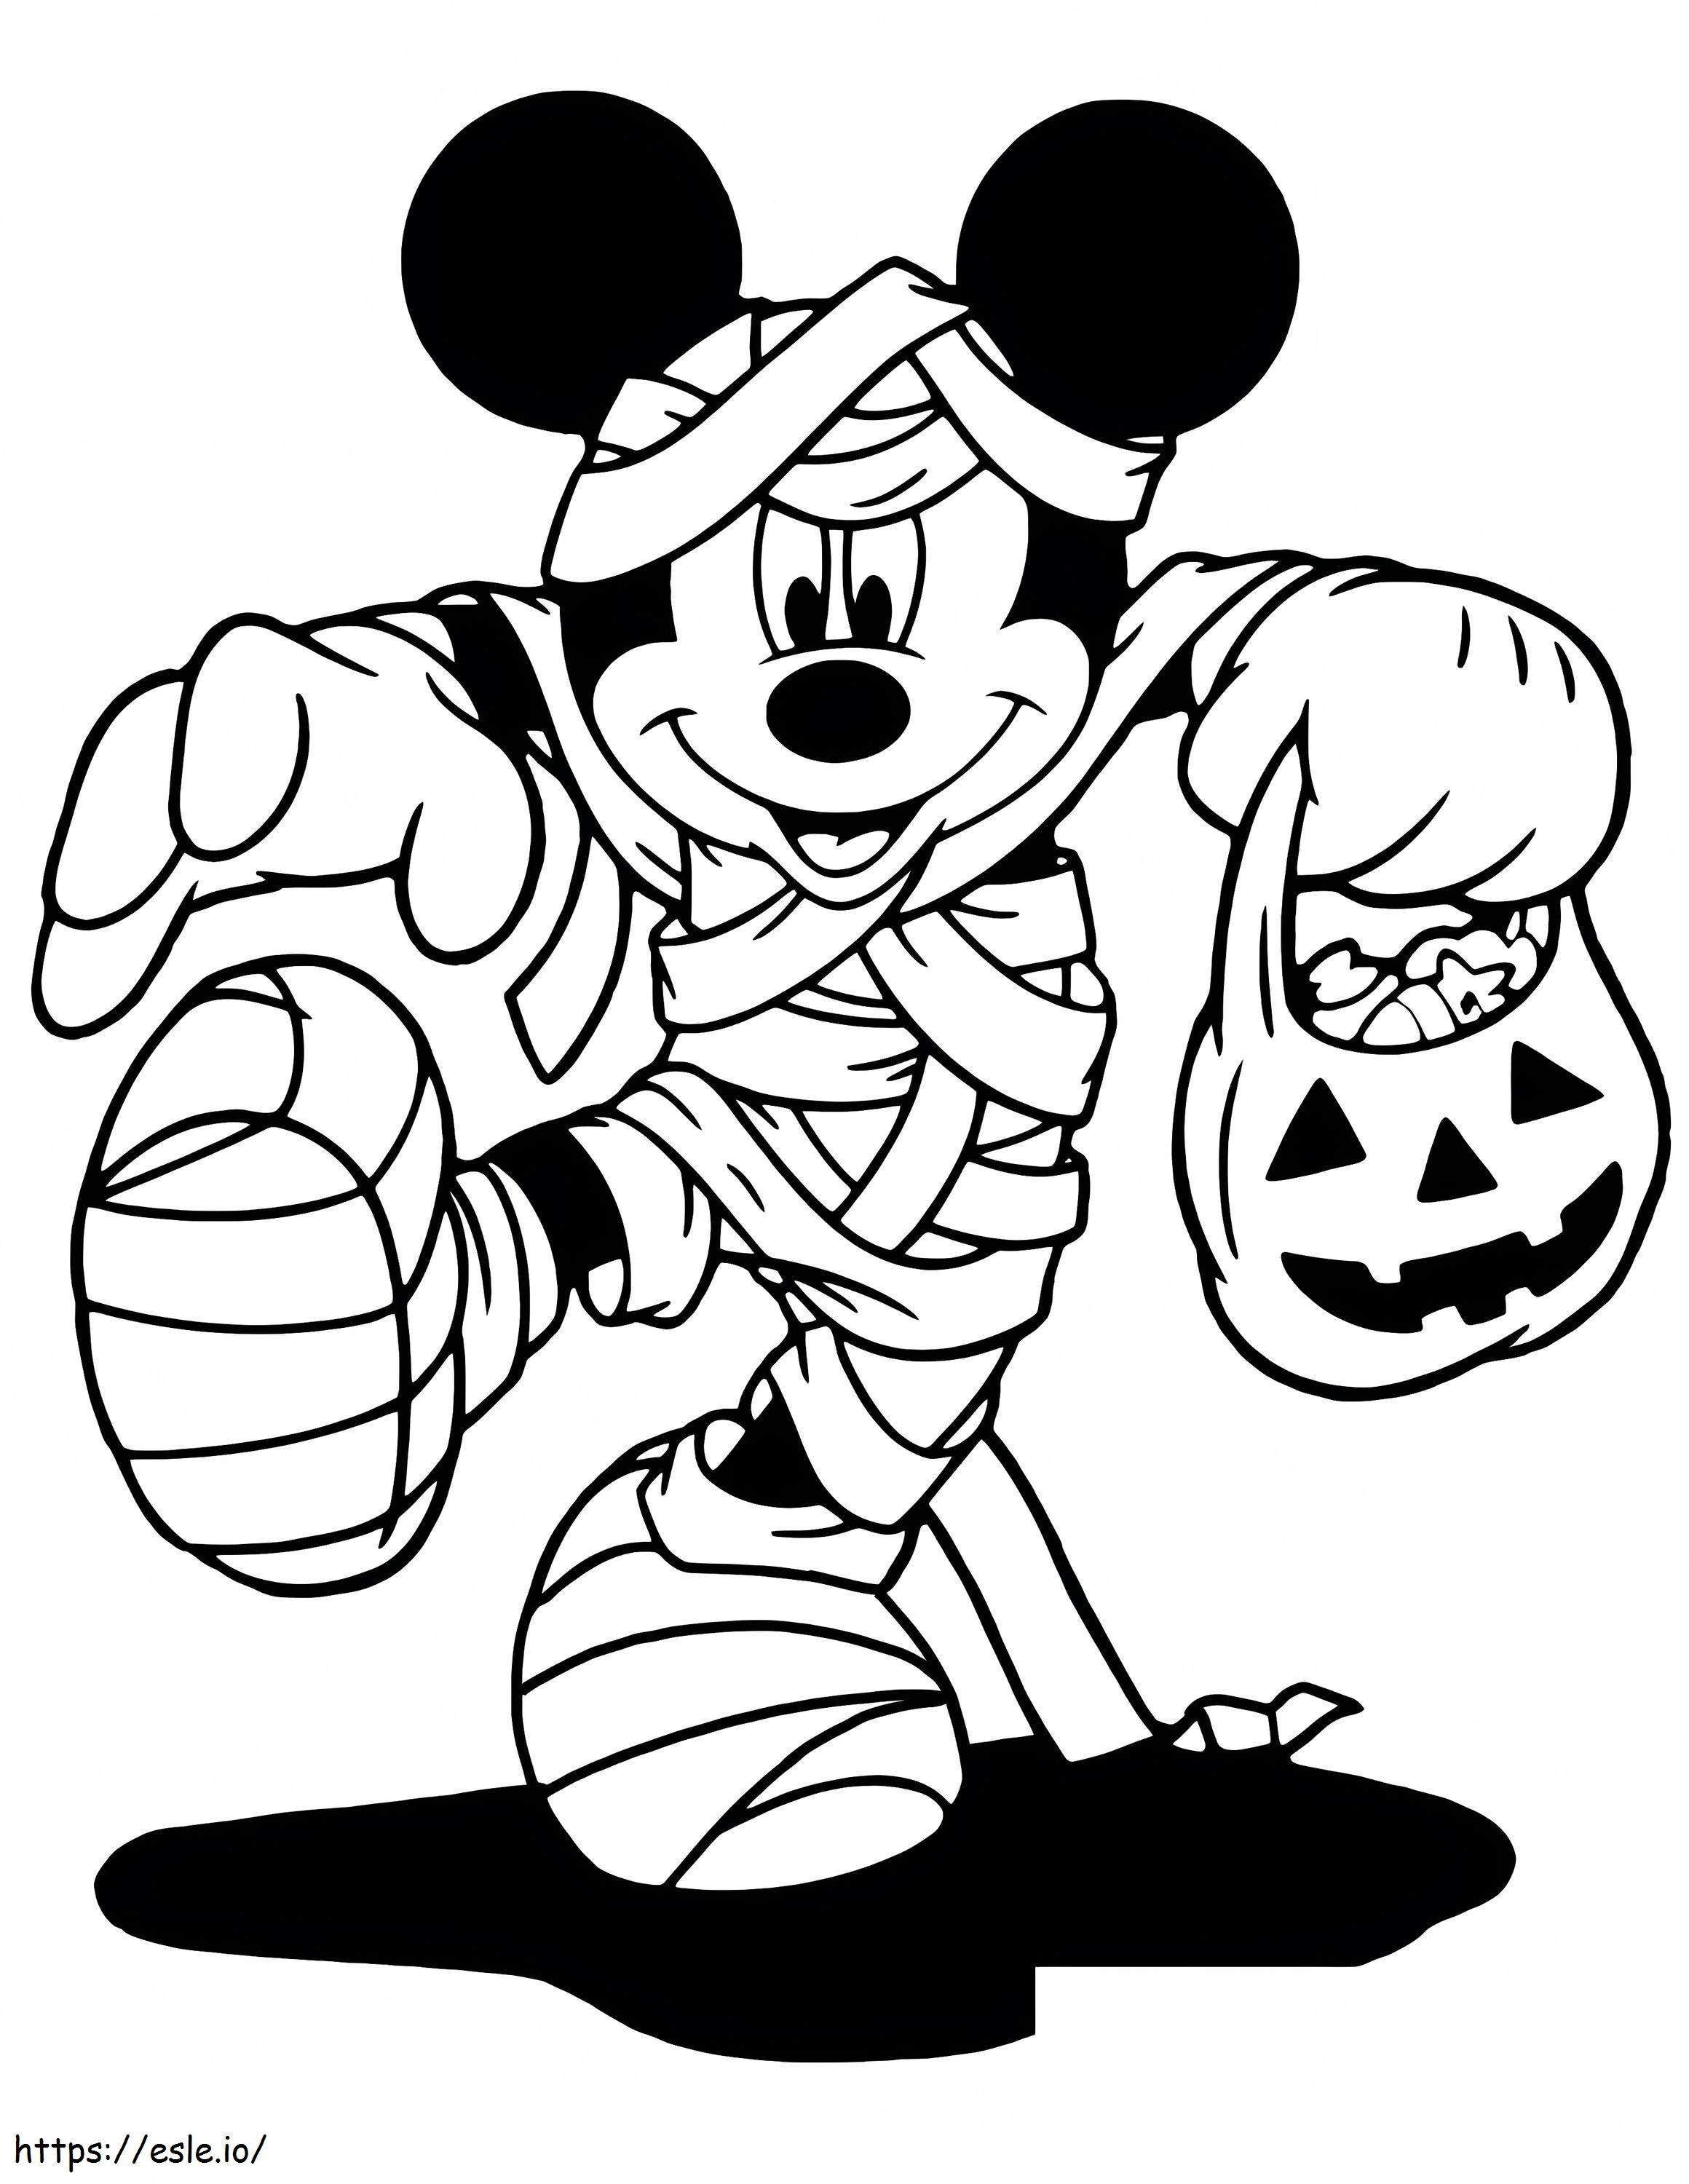 Coloriage Maman Mickey à Halloween à imprimer dessin